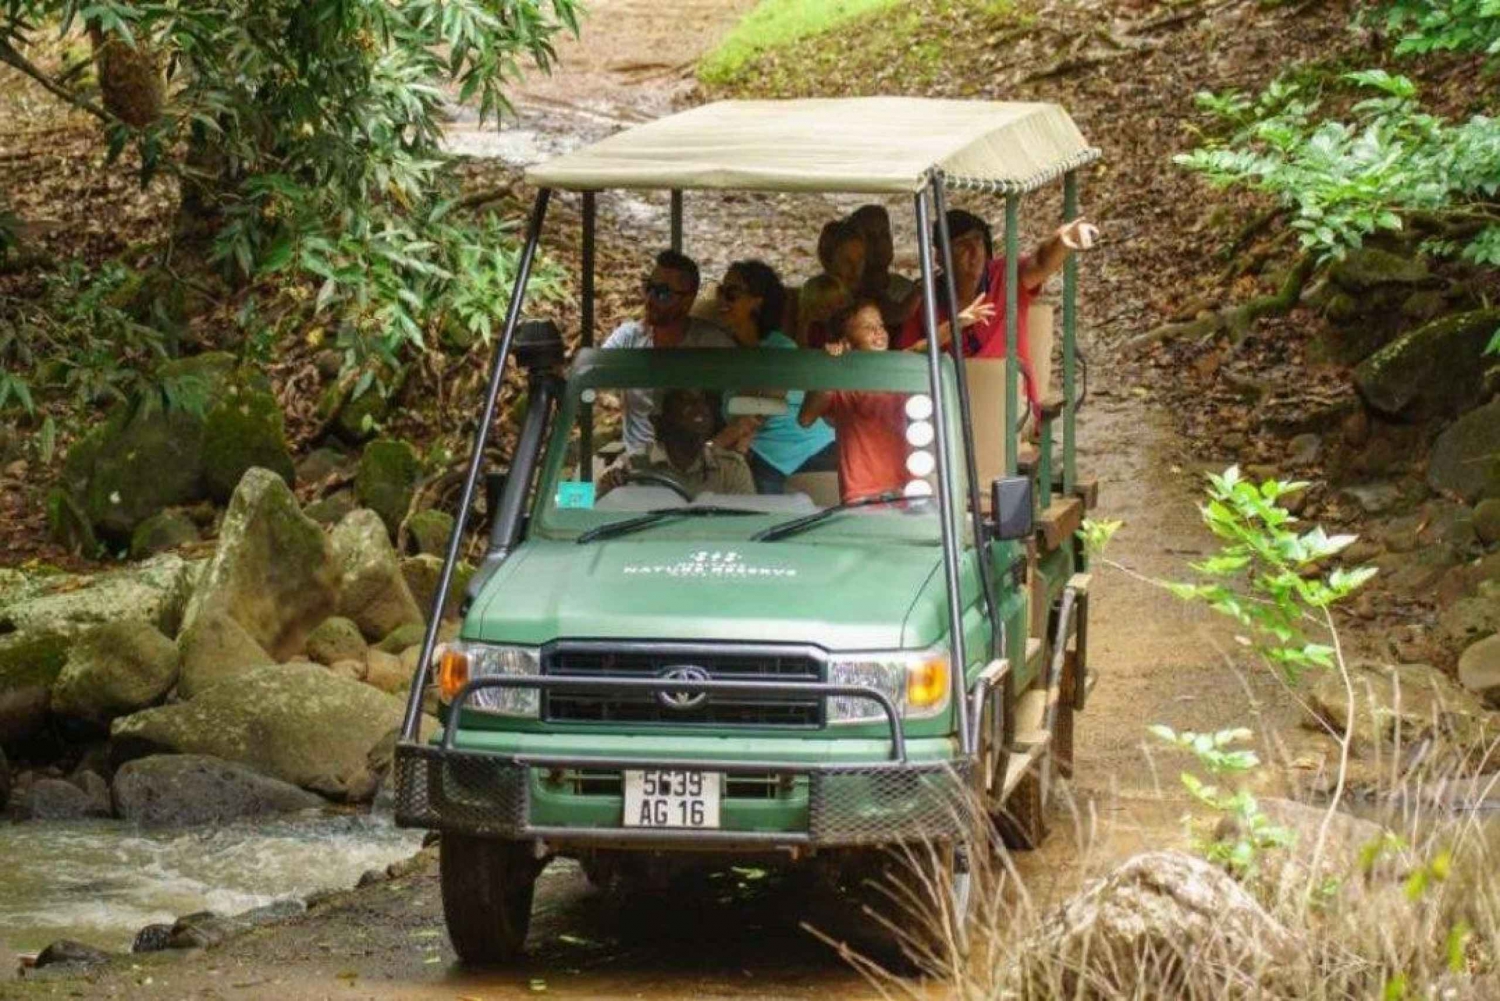 Mauritius 4x4 safari adventure with pick up